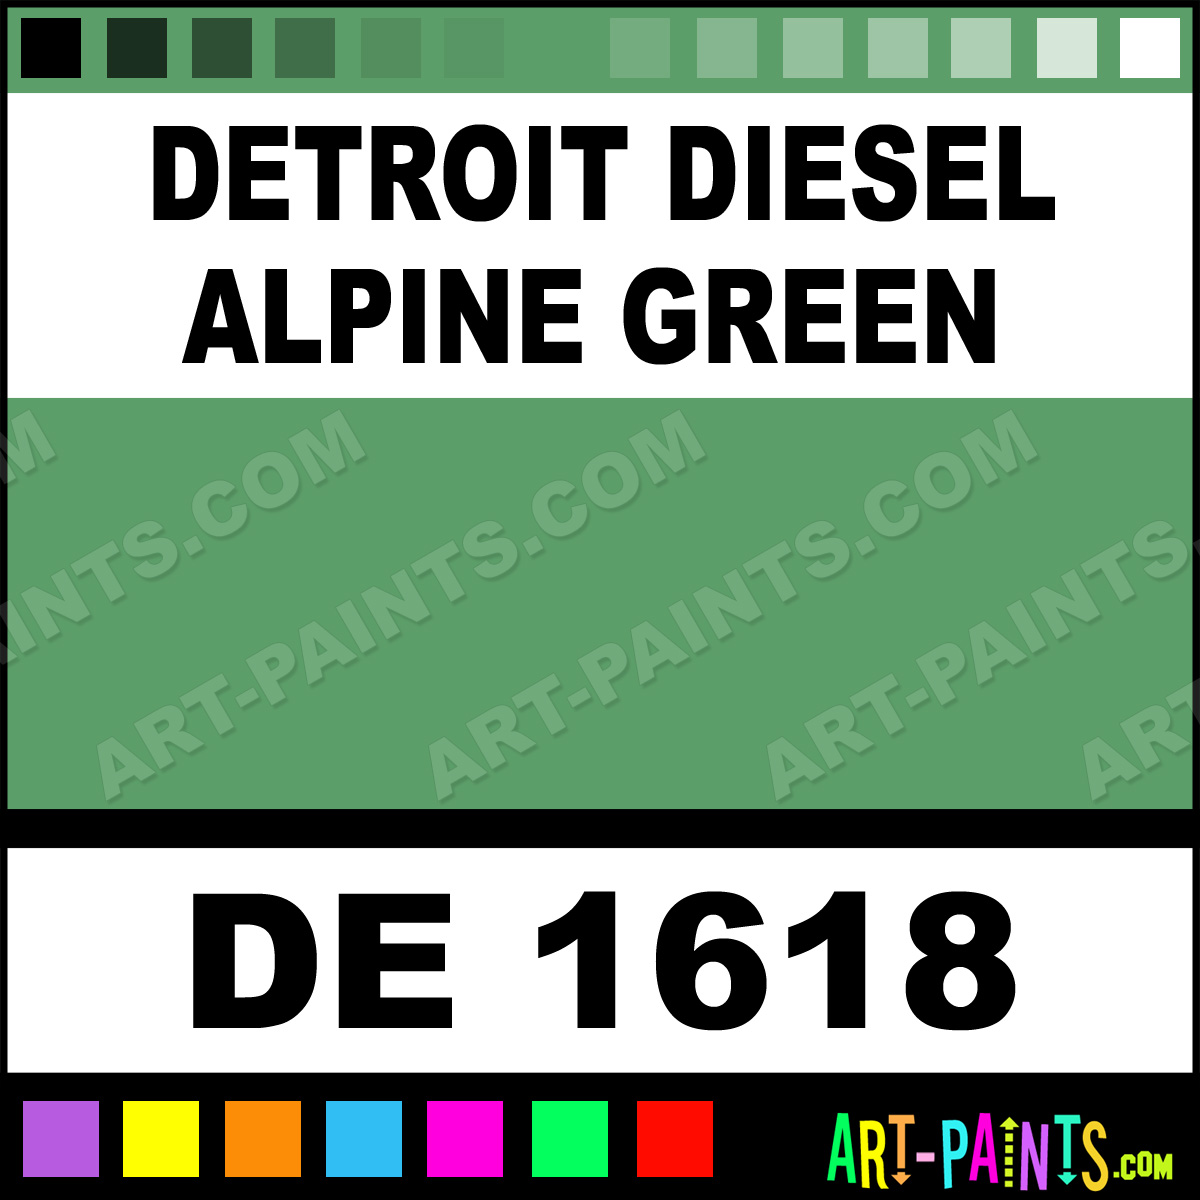 Detroit-Diesel-Alpine-Green-lg.jpg